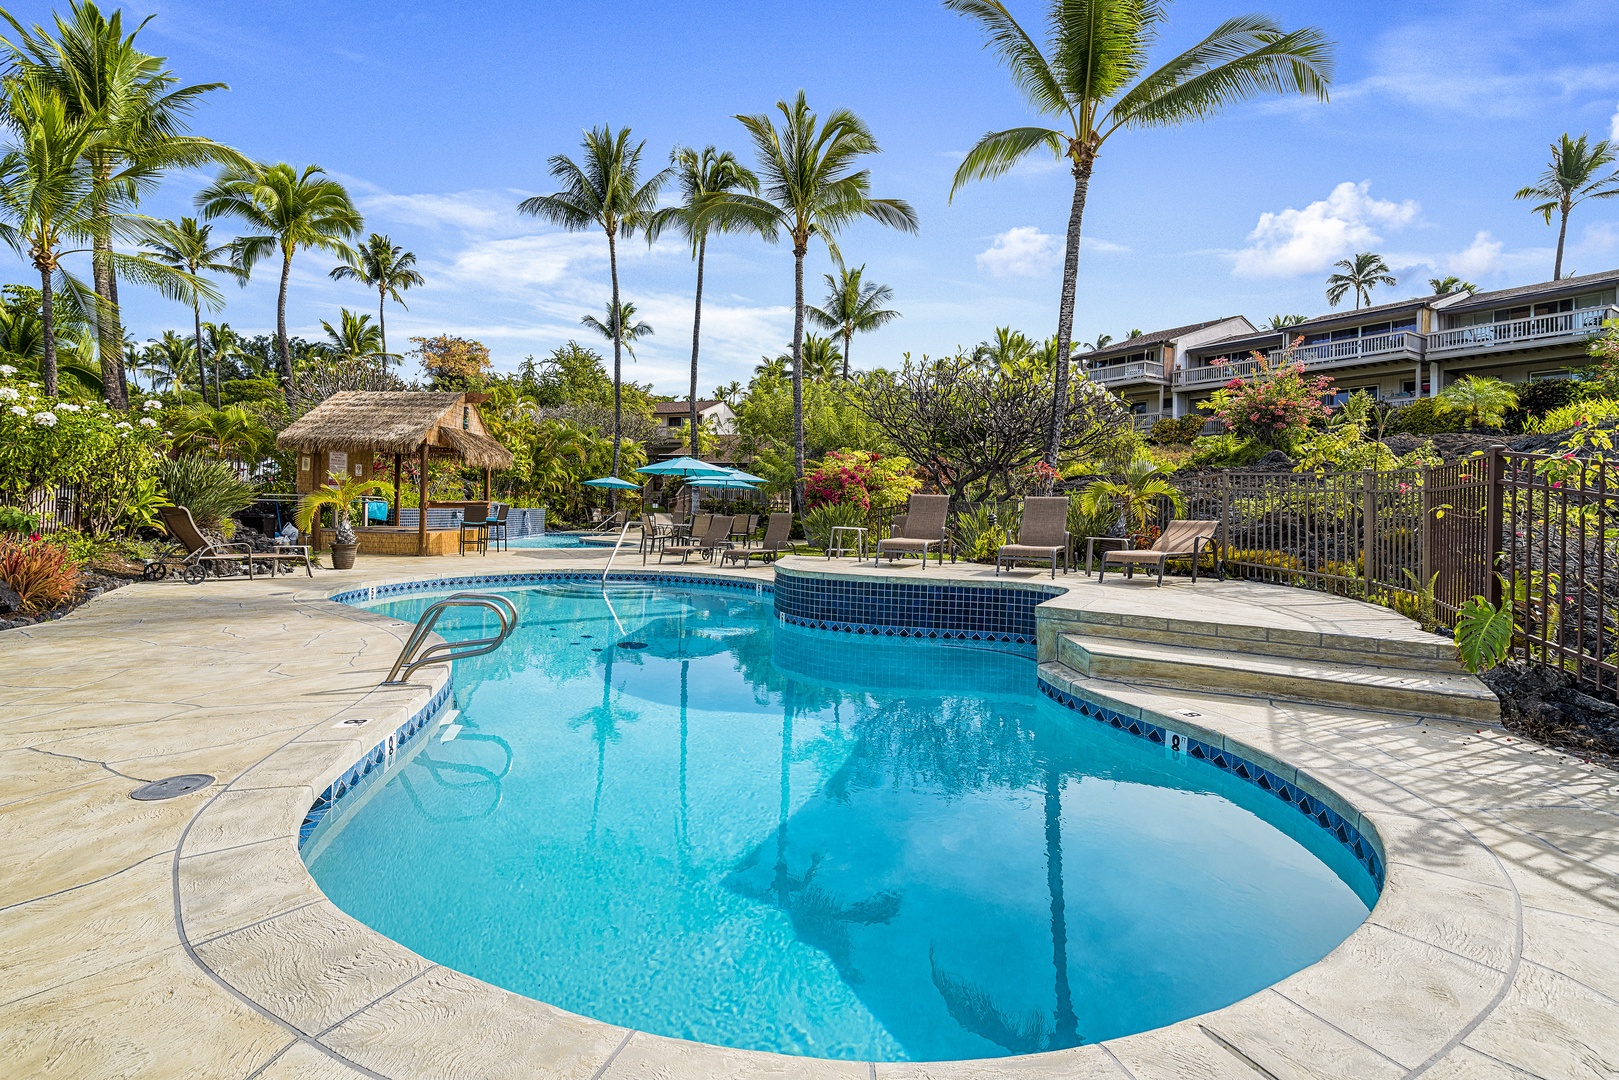 Kailua Kona Vacation Rentals, Keauhou Resort 125 - Beautiful Keauhou Resort Pool